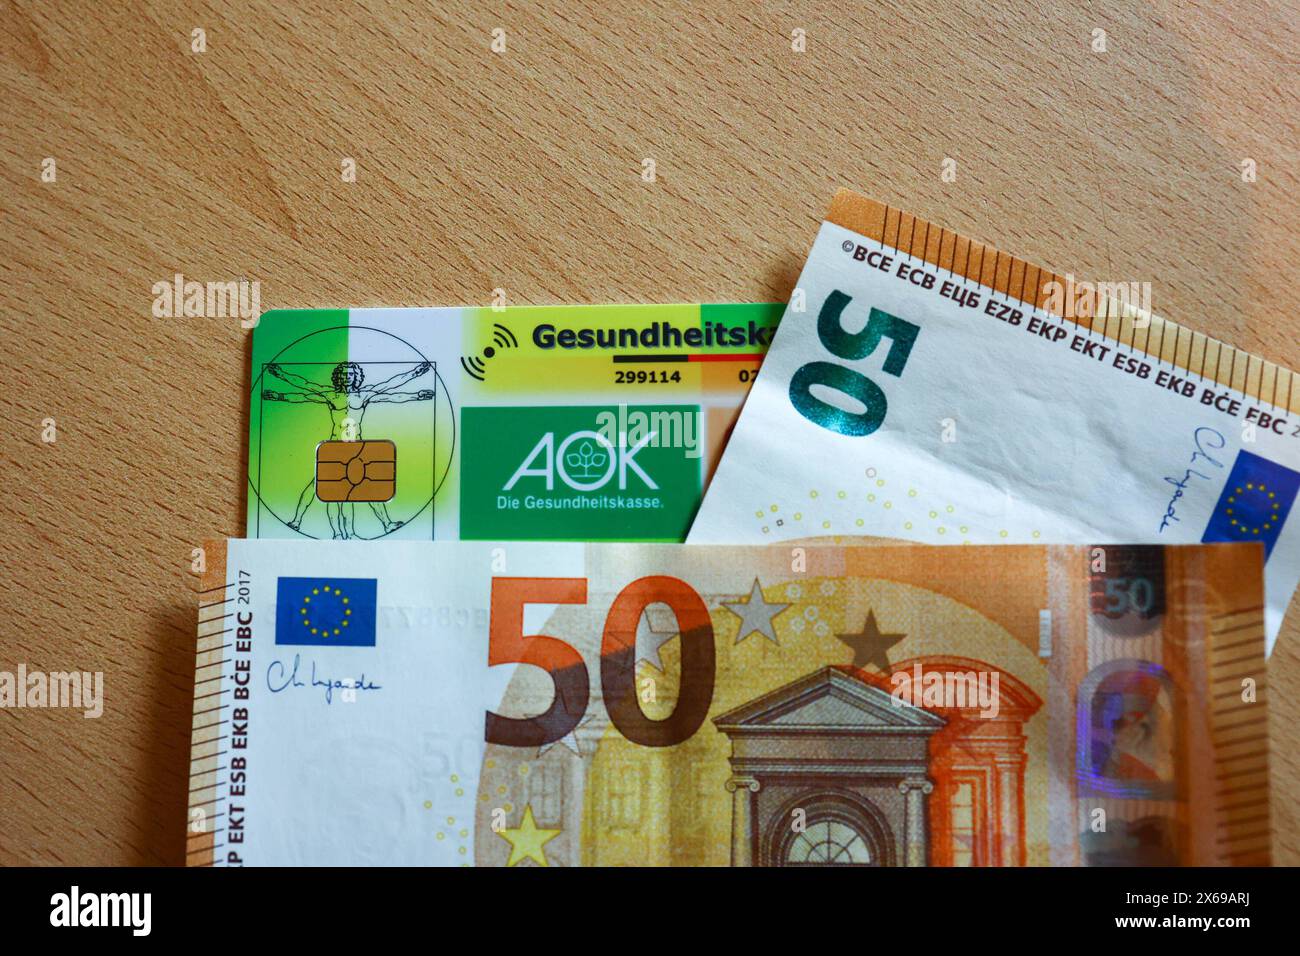 Krankenkasse Karte mit Geld *** carta di assicurazione sanitaria con denaro Copyright: XLobeca/RHx Foto Stock